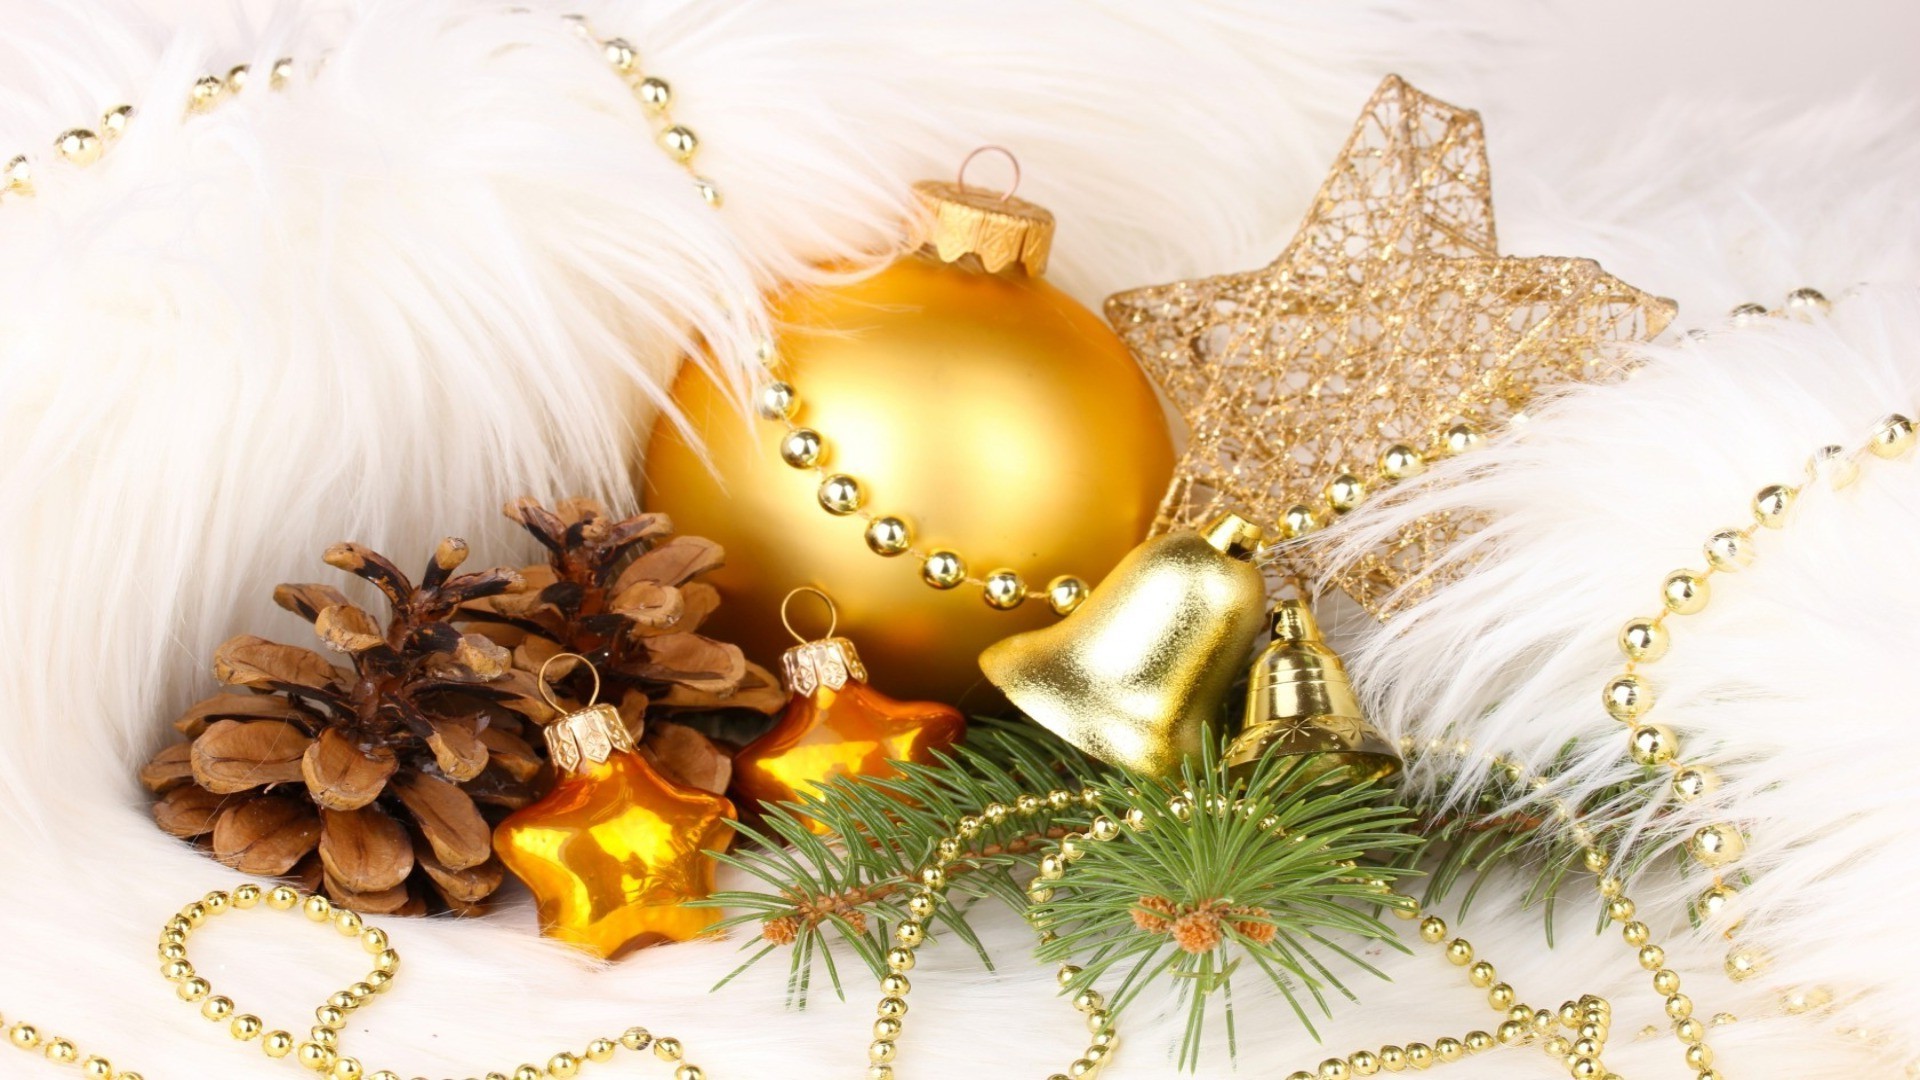 new year christmas decoration celebration winter gold thread traditional shining beads ball desktop gift merry glisten luxury season ornate